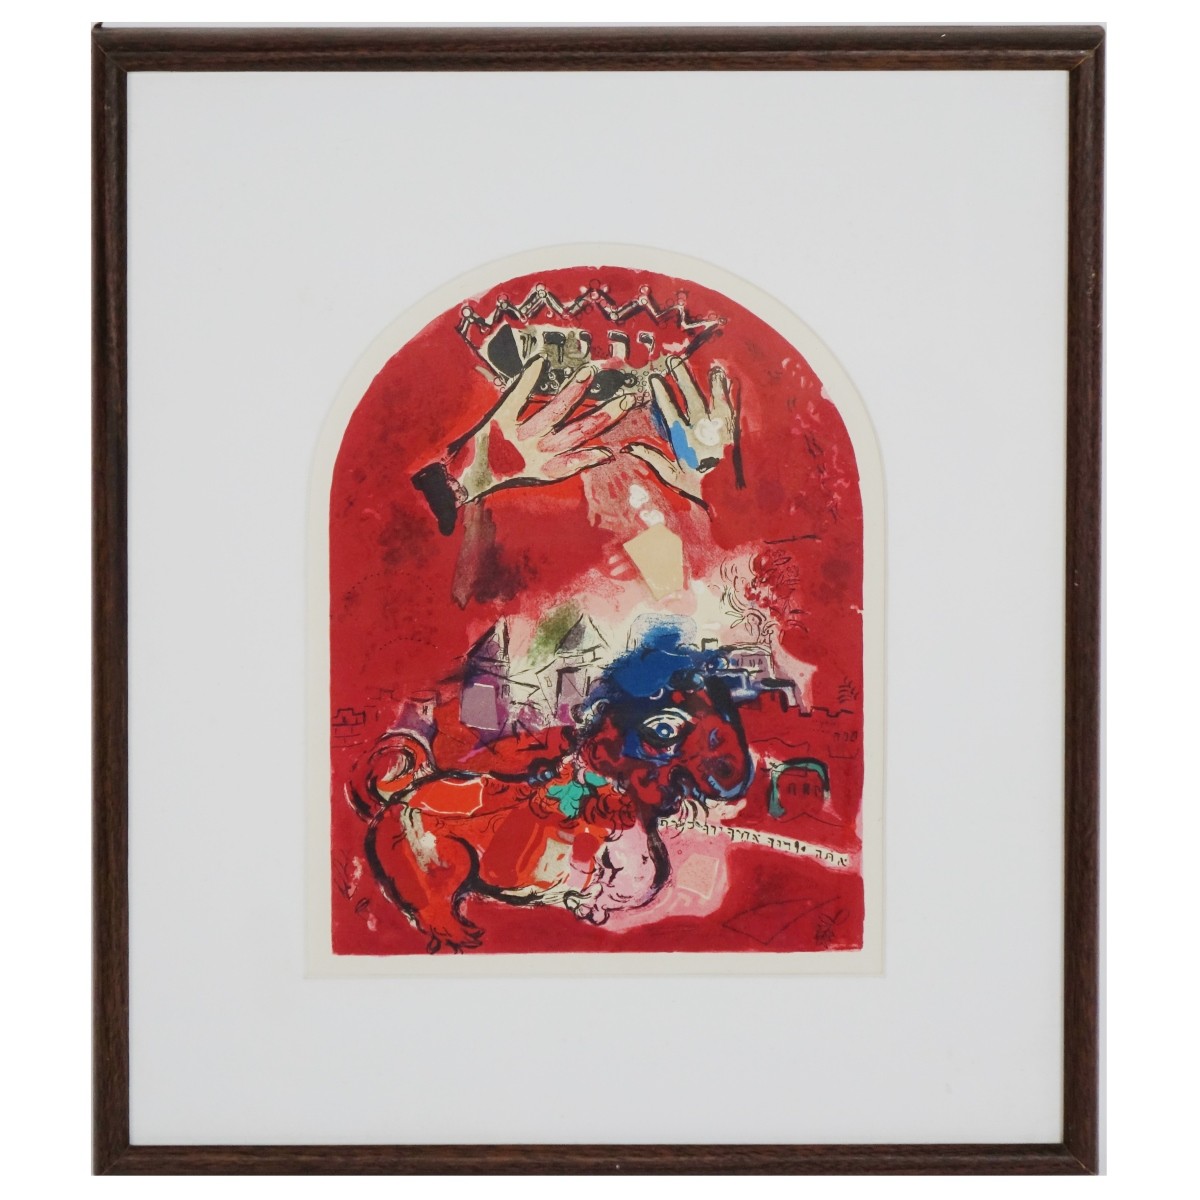 Marc Chagall (1887-1985) Judah Lithograph